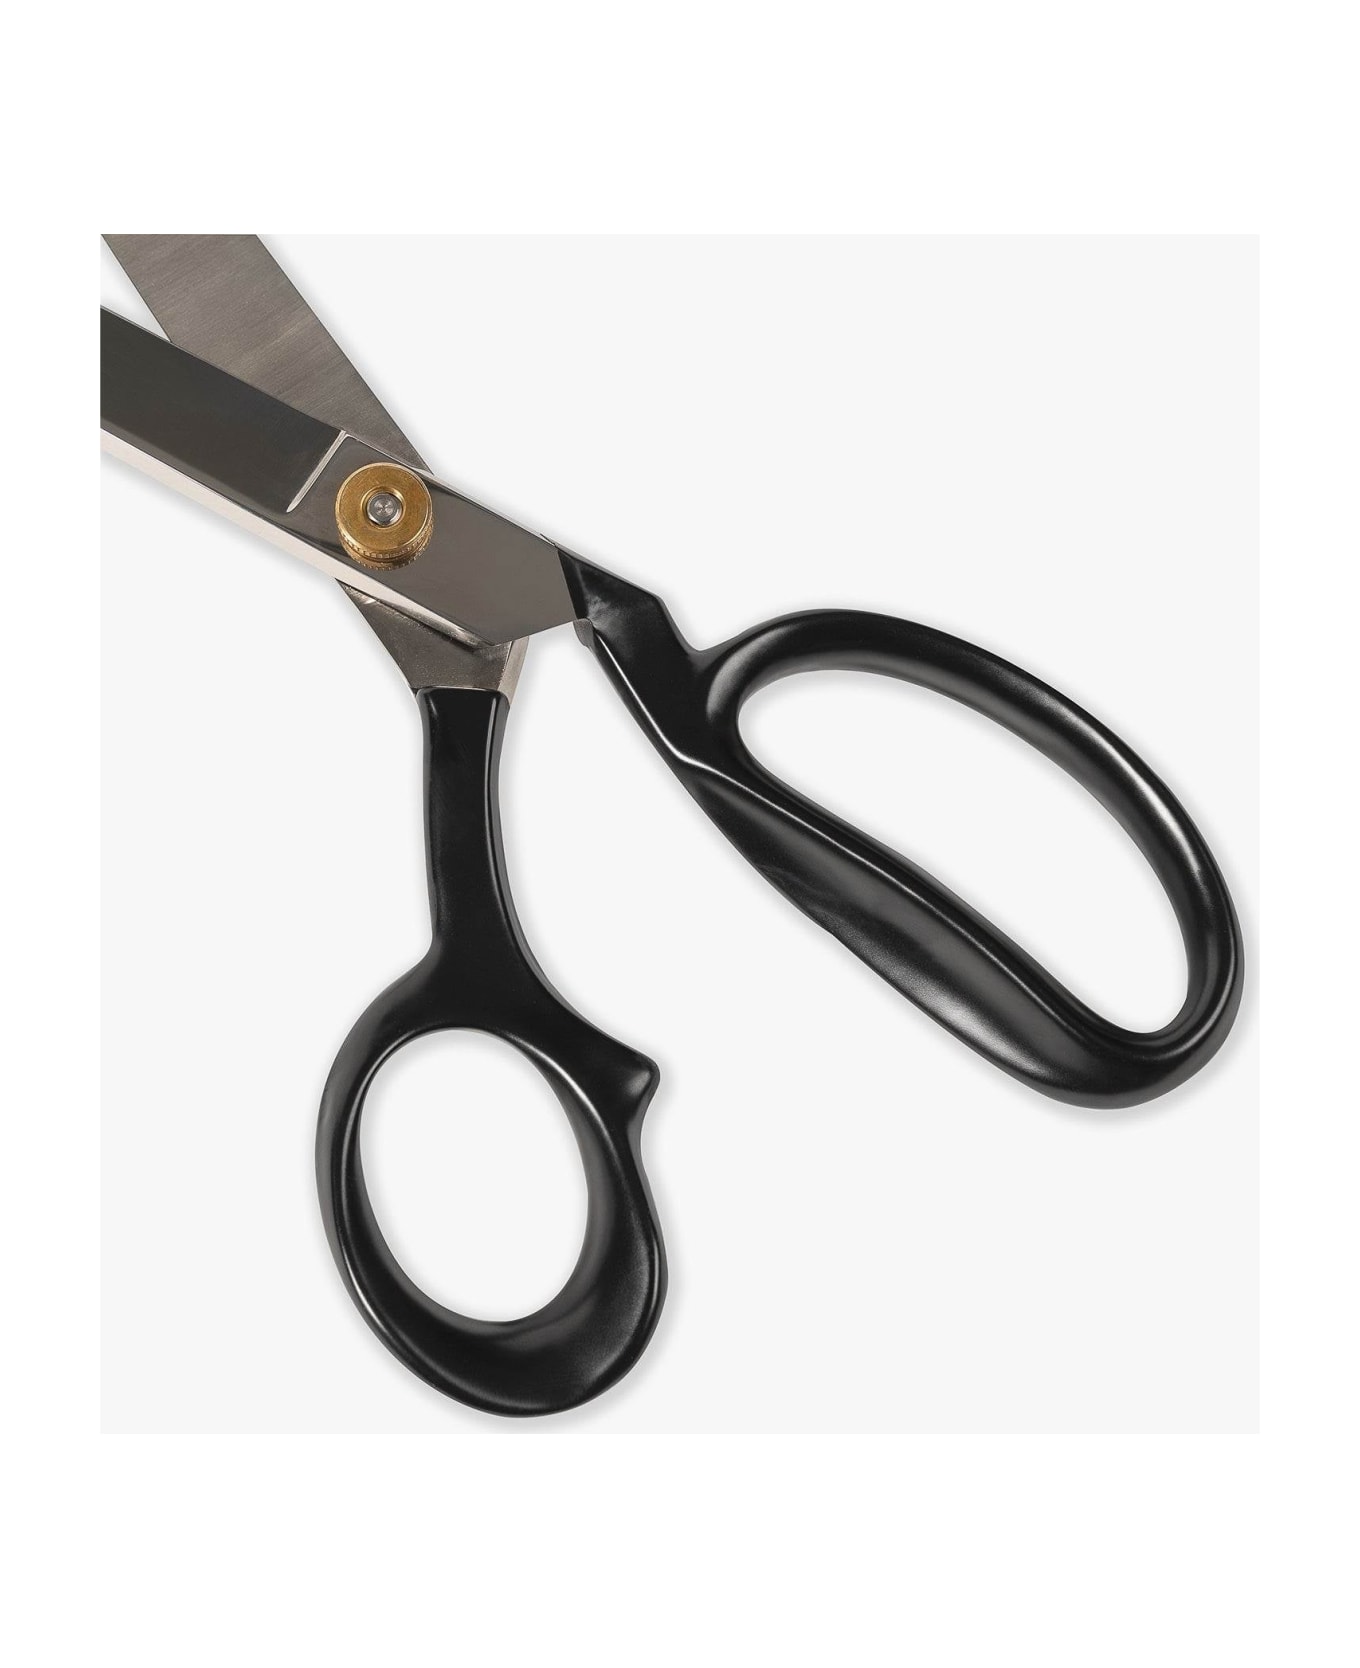 Larusmiani Tailoring Scissors  - Neutral 小物